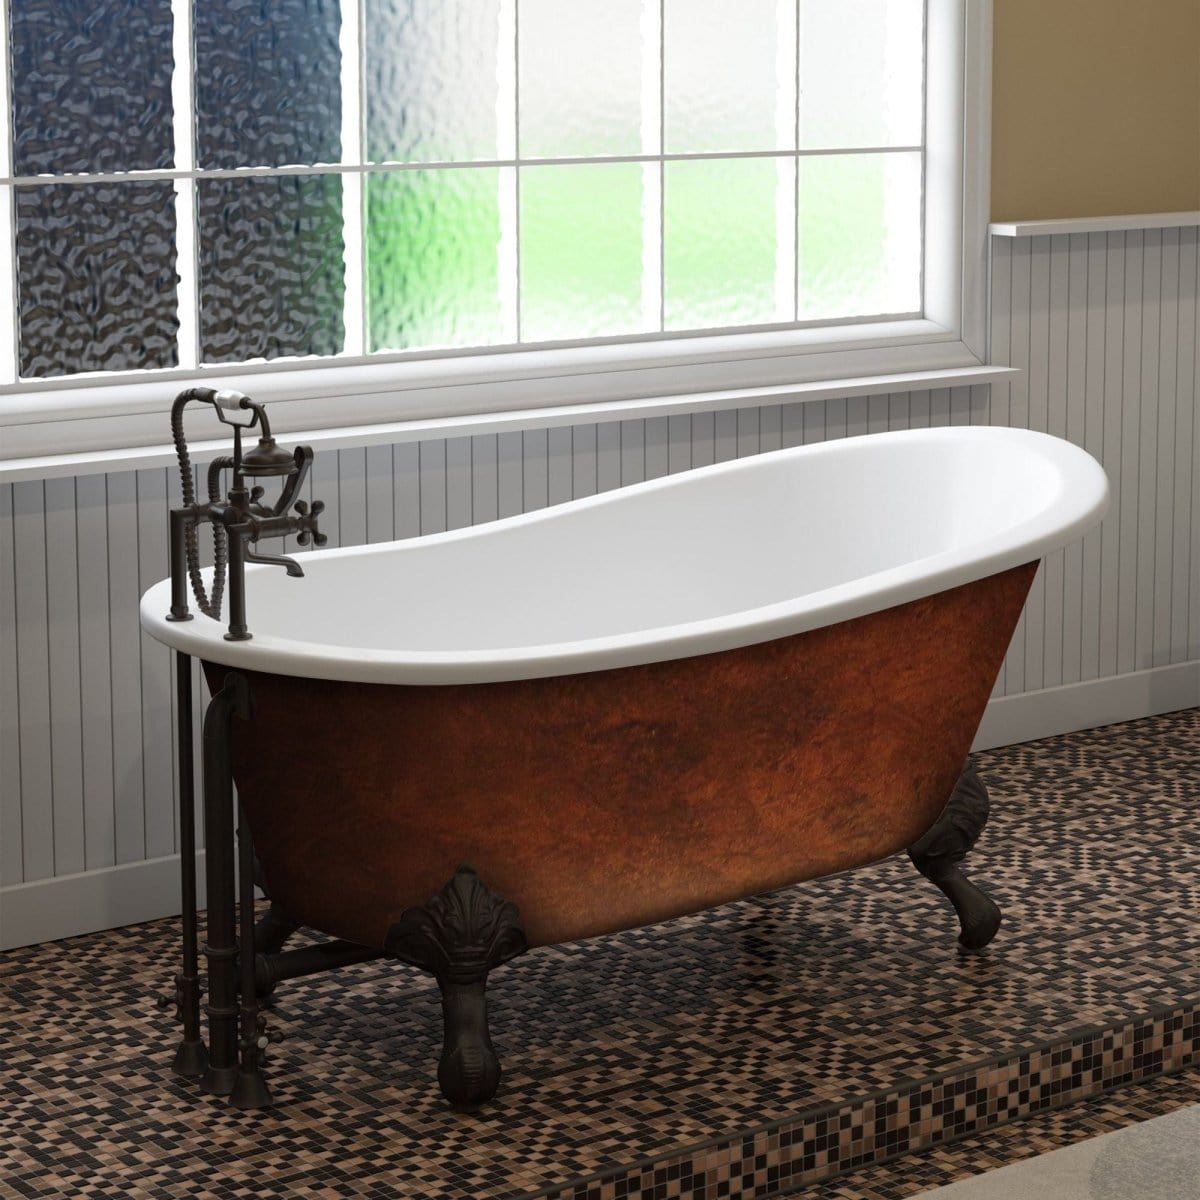 FAUX COPPER BRONZE CAST IRON CLAWFOOT BATHTUB - NO FAUCET DRILLINGS - Oasis Bathtubs